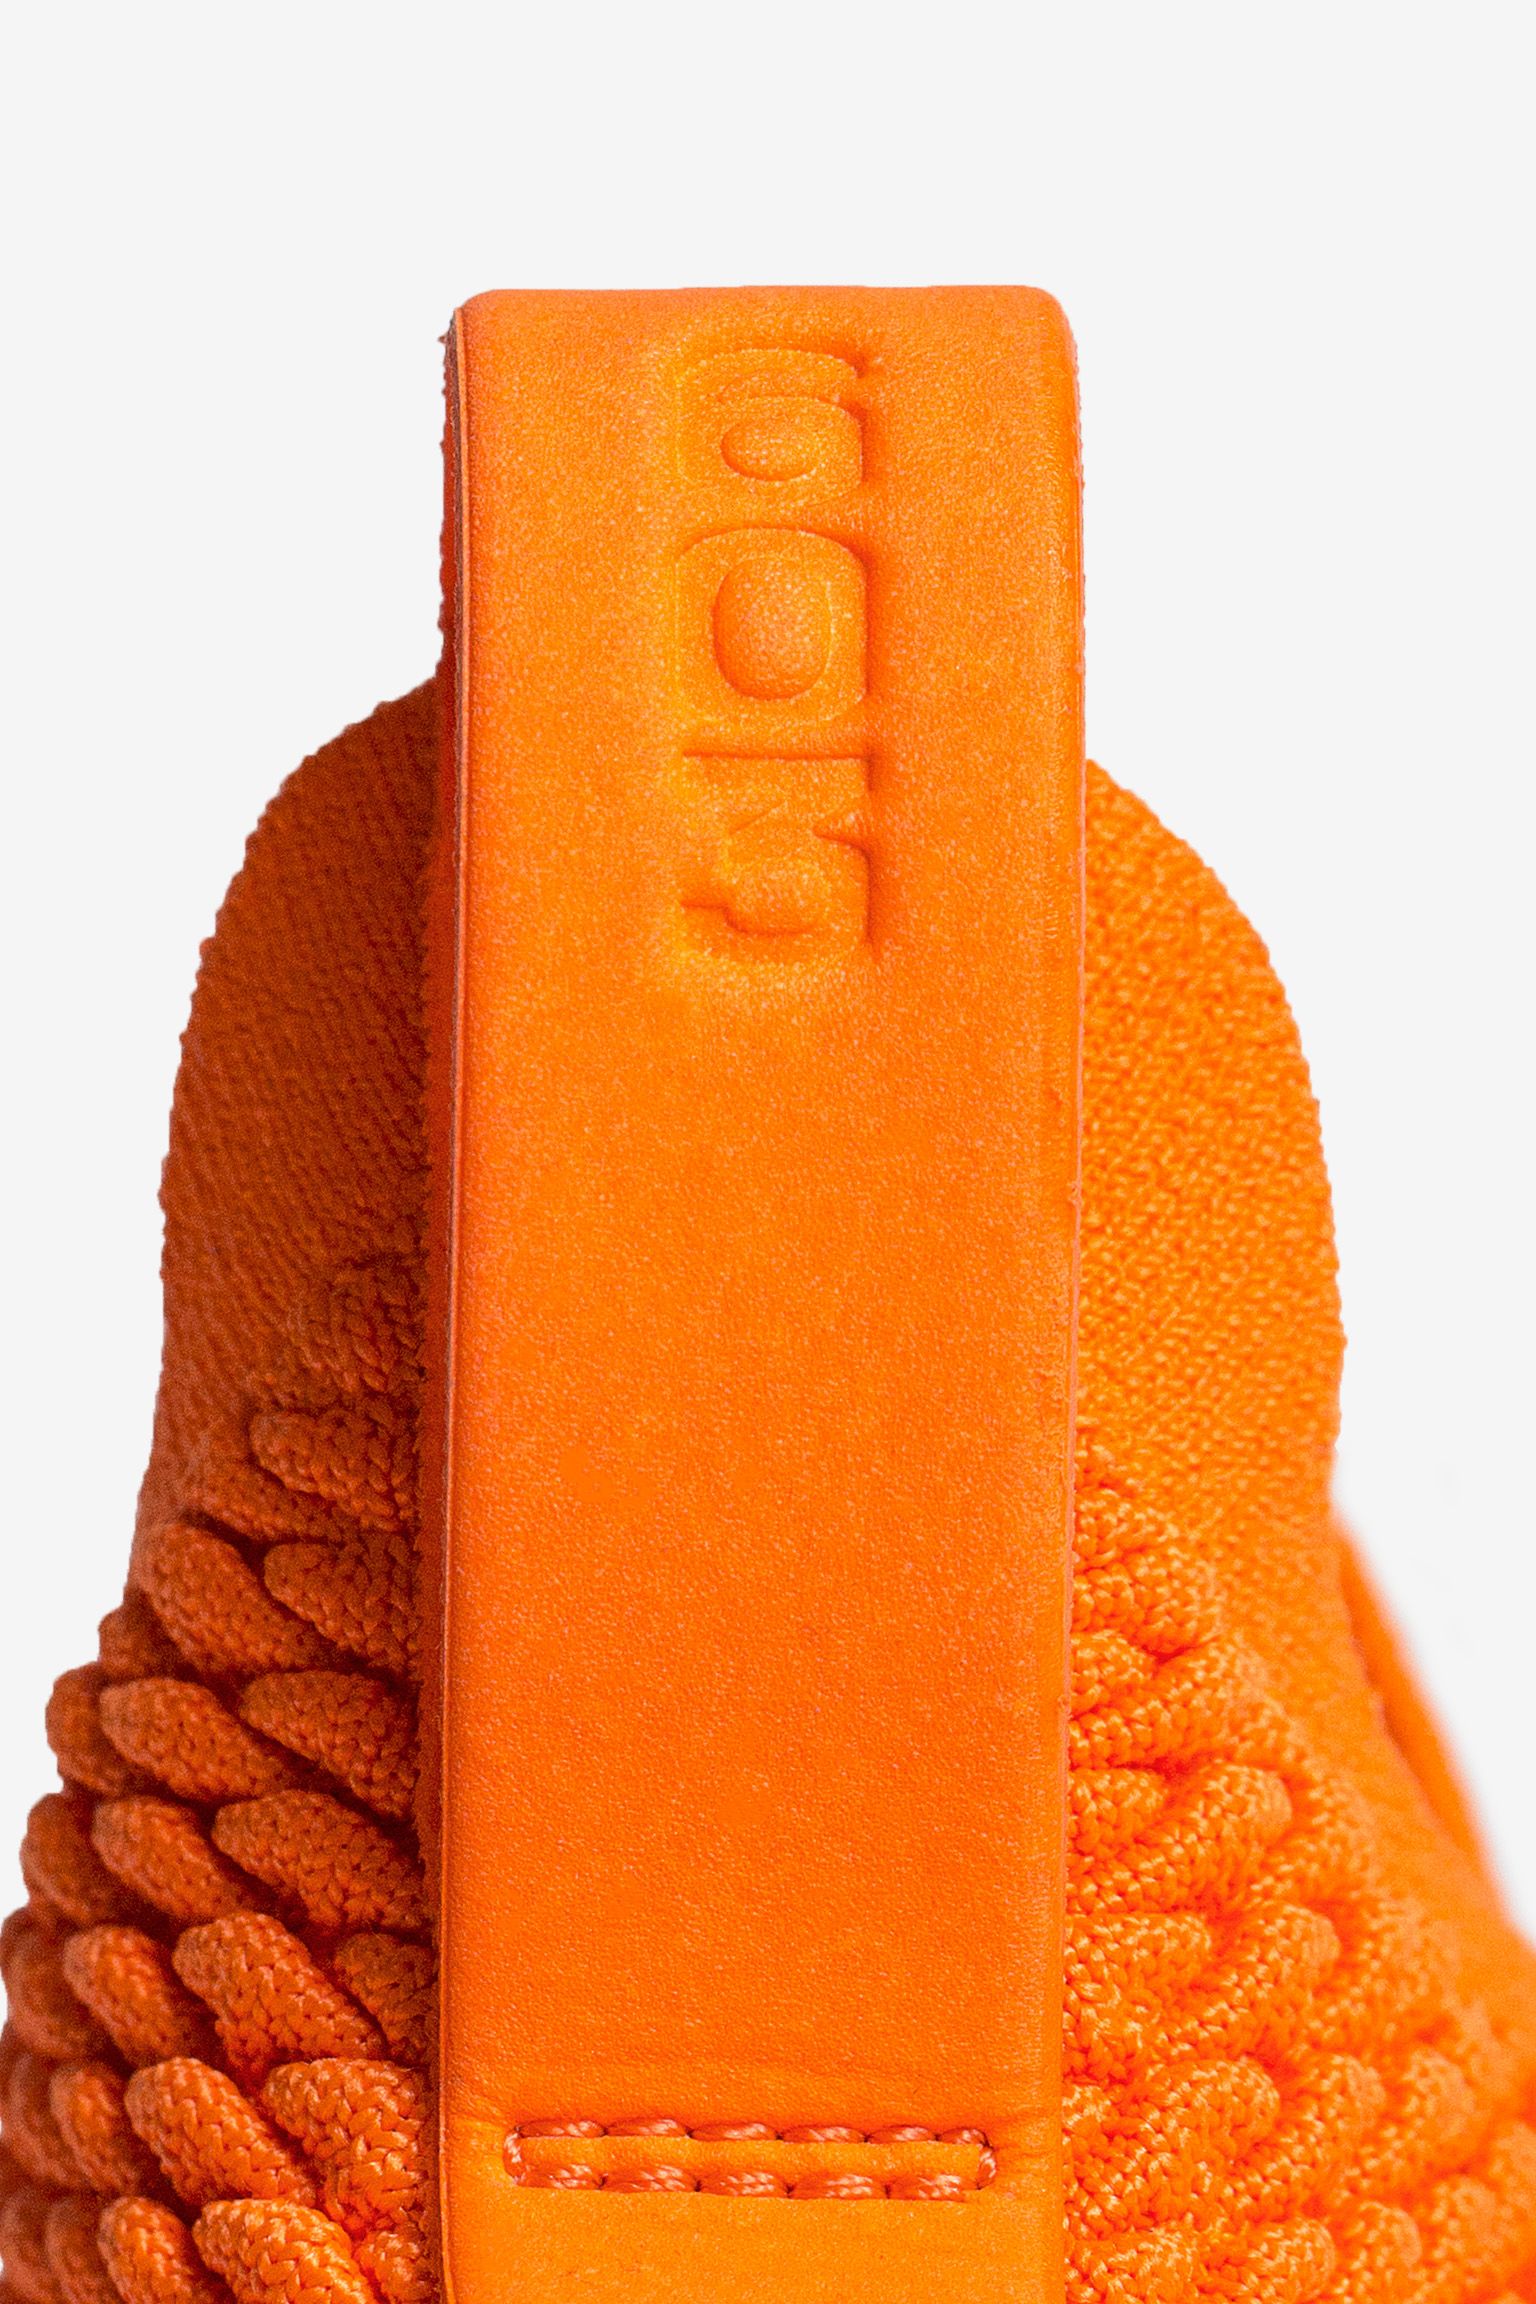 Nike Lebron 15 'Orange Box' Release 